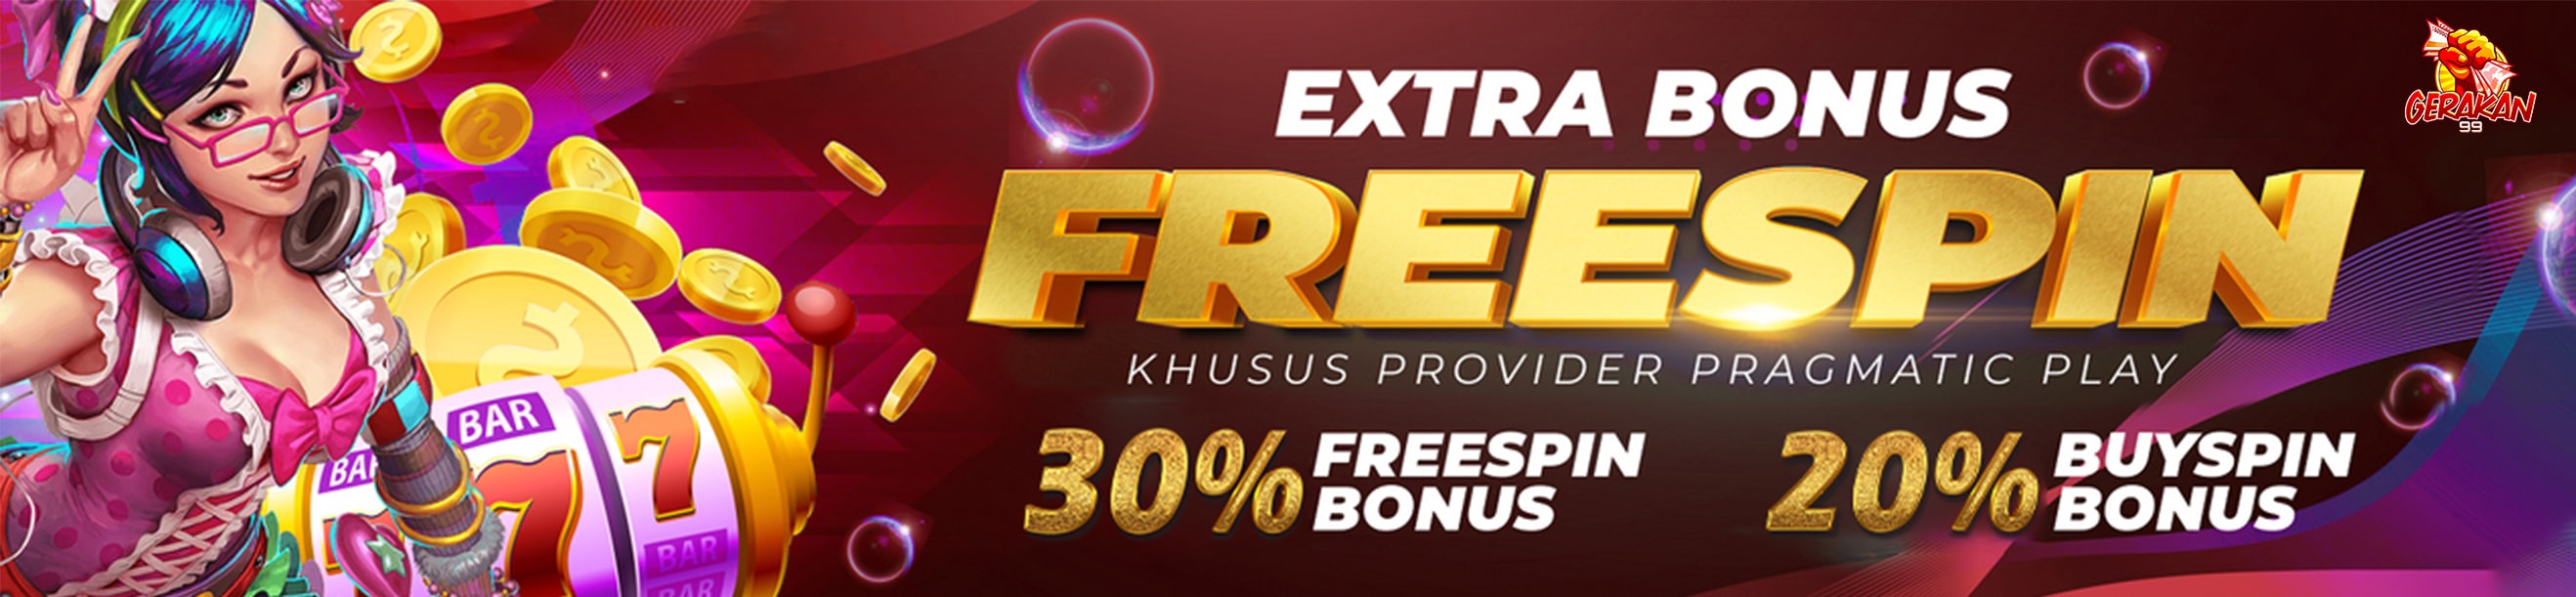 Extra Bonus Freespin